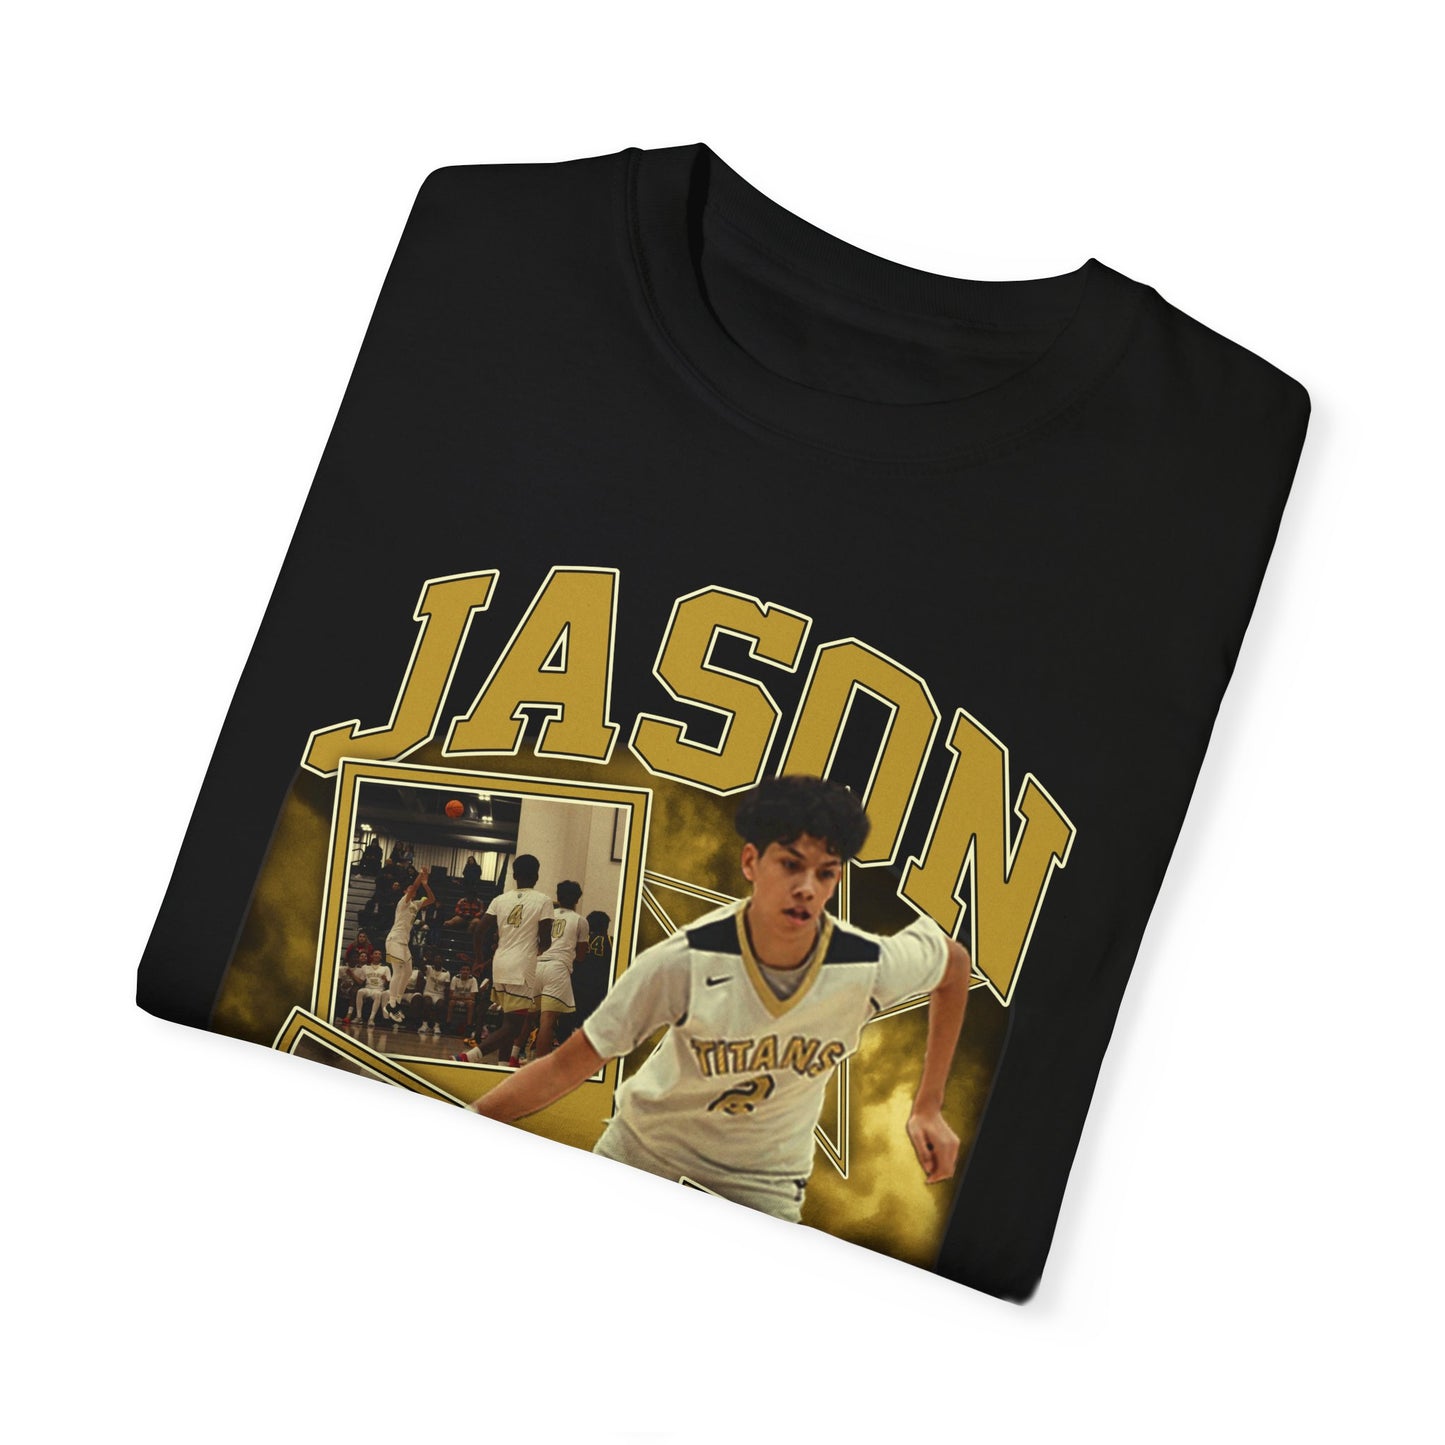 Jason Alvarez Graphic T-shirt